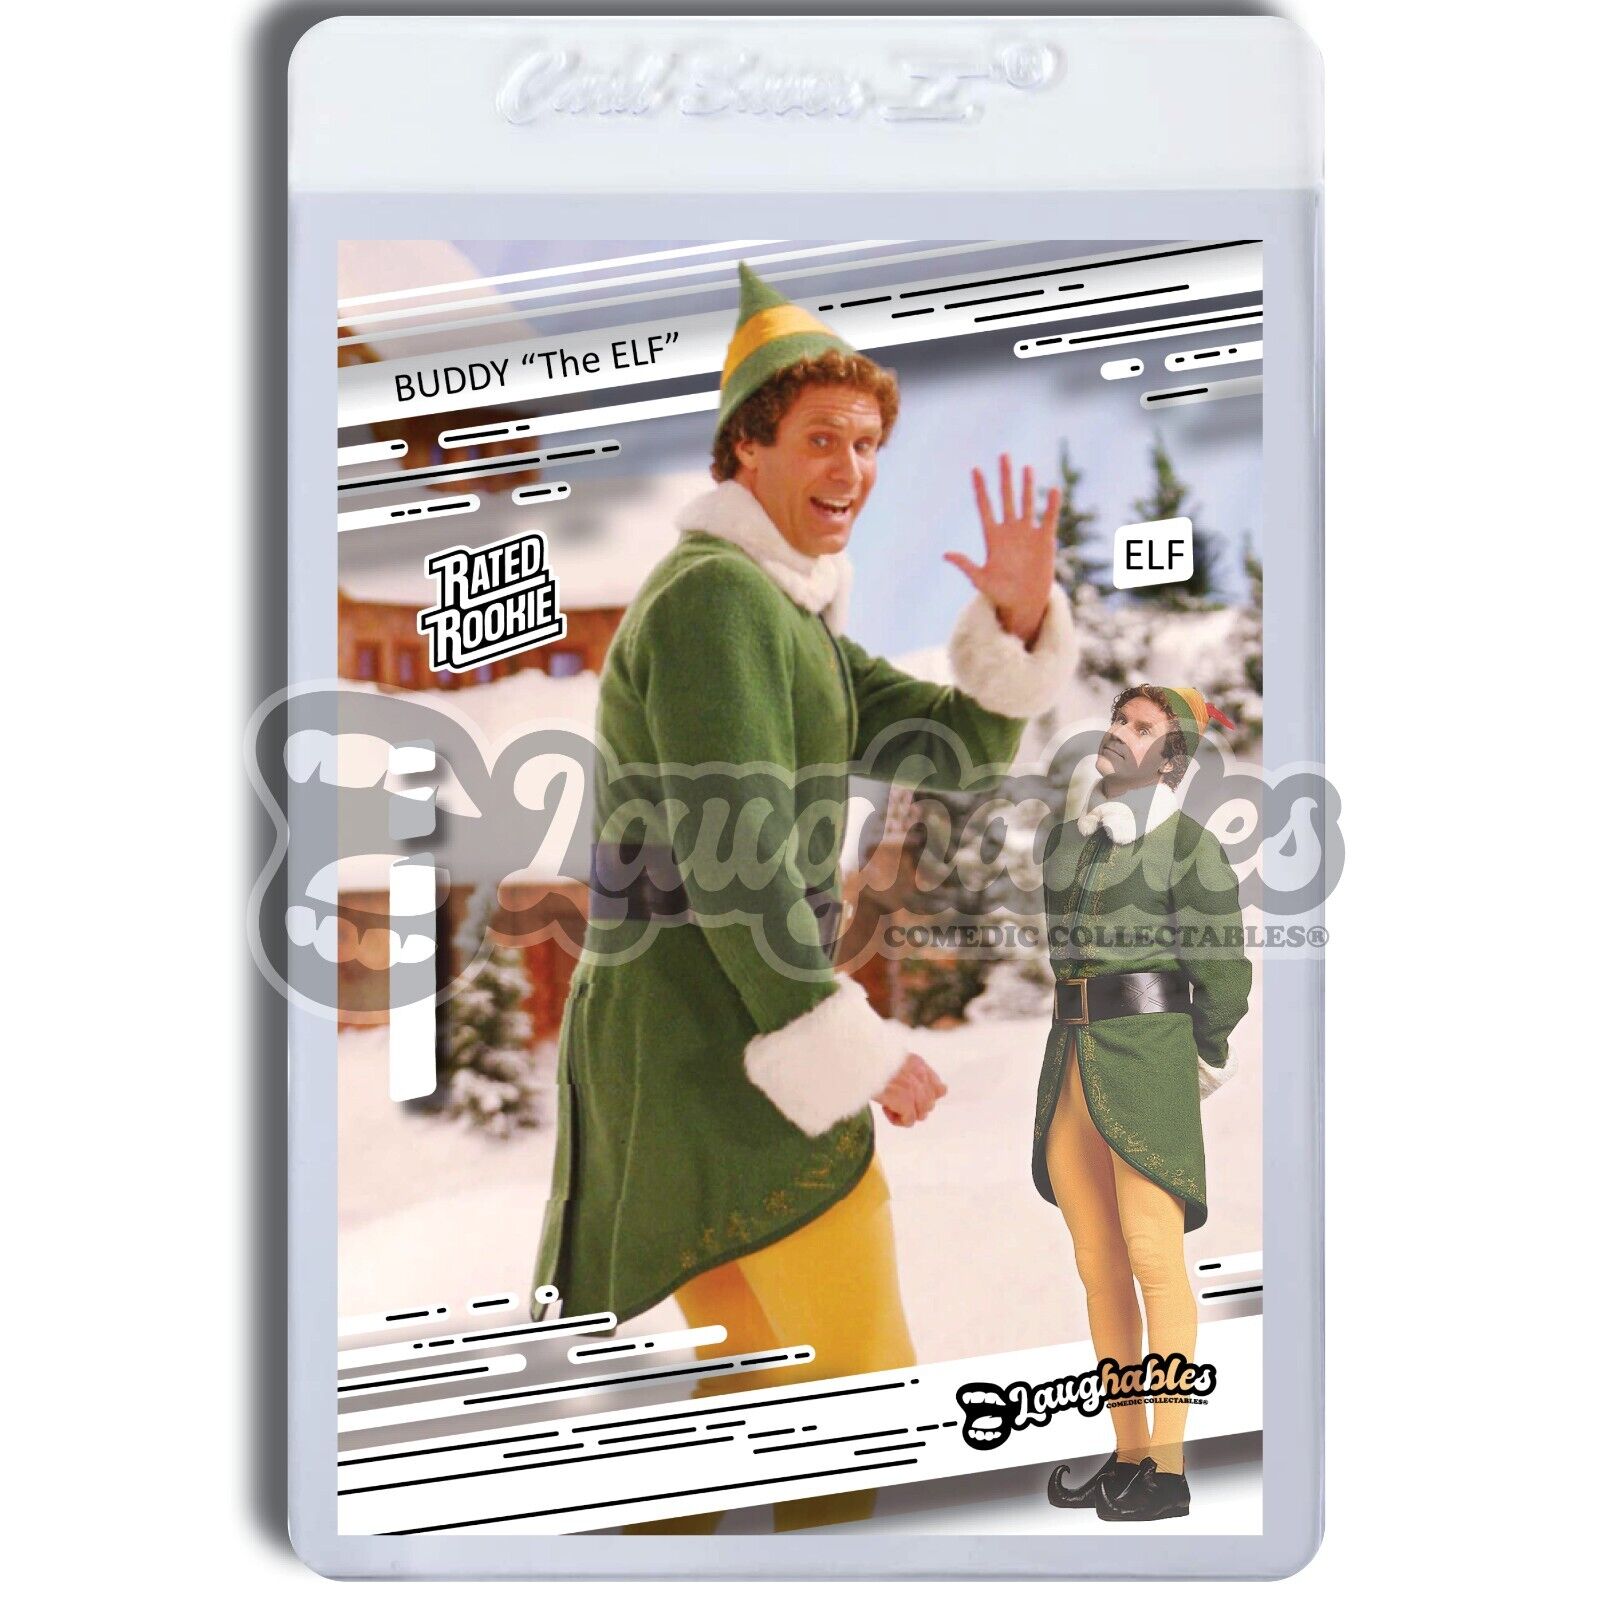 Buddy "The Elf" | Rated Rookie | Custom Art Trading Card Novelty